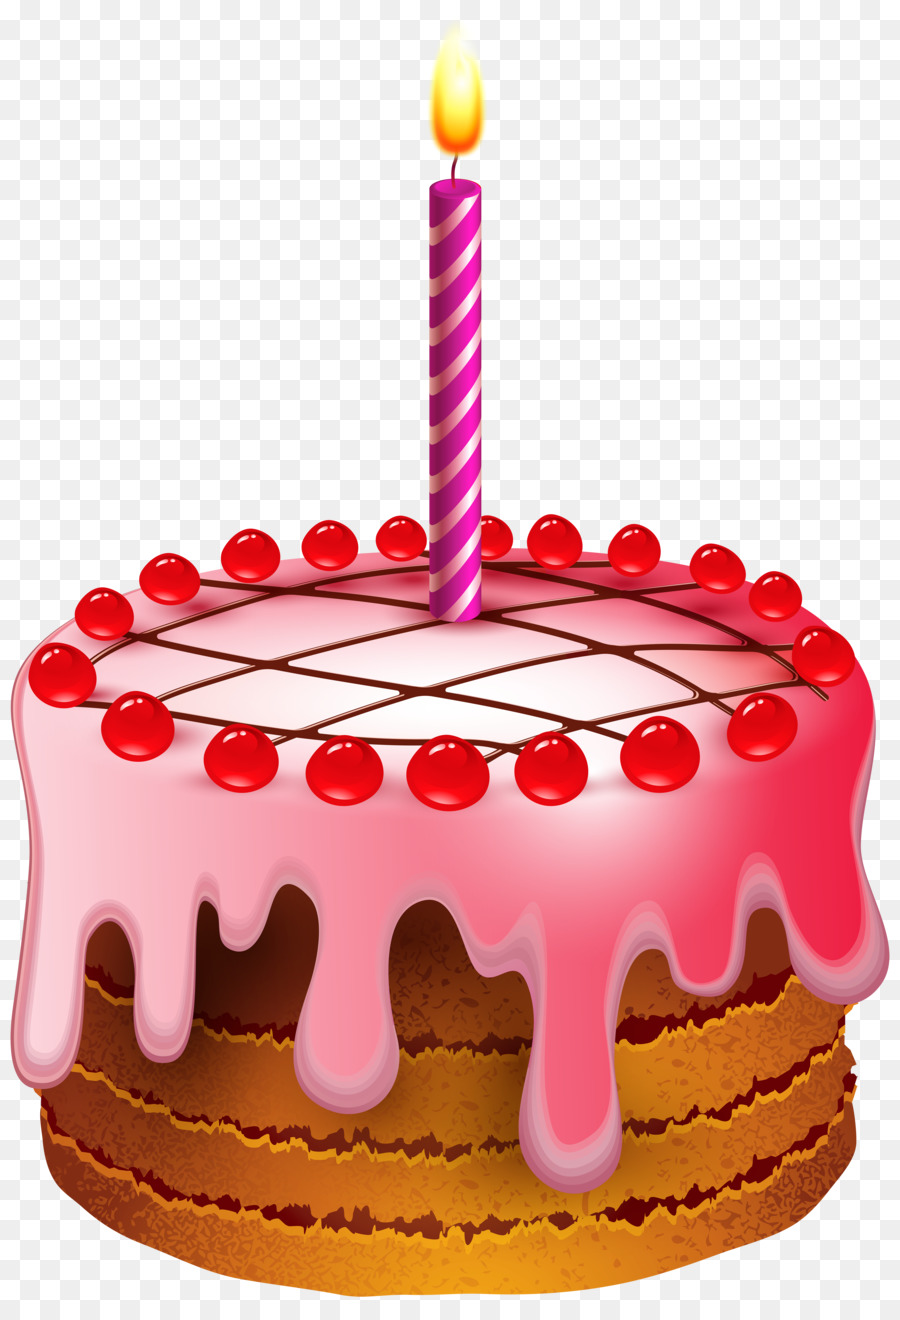 Birthday cake Clip art - cake png download - 5489*8000 - Free Transparent Birthday Cake png Download.